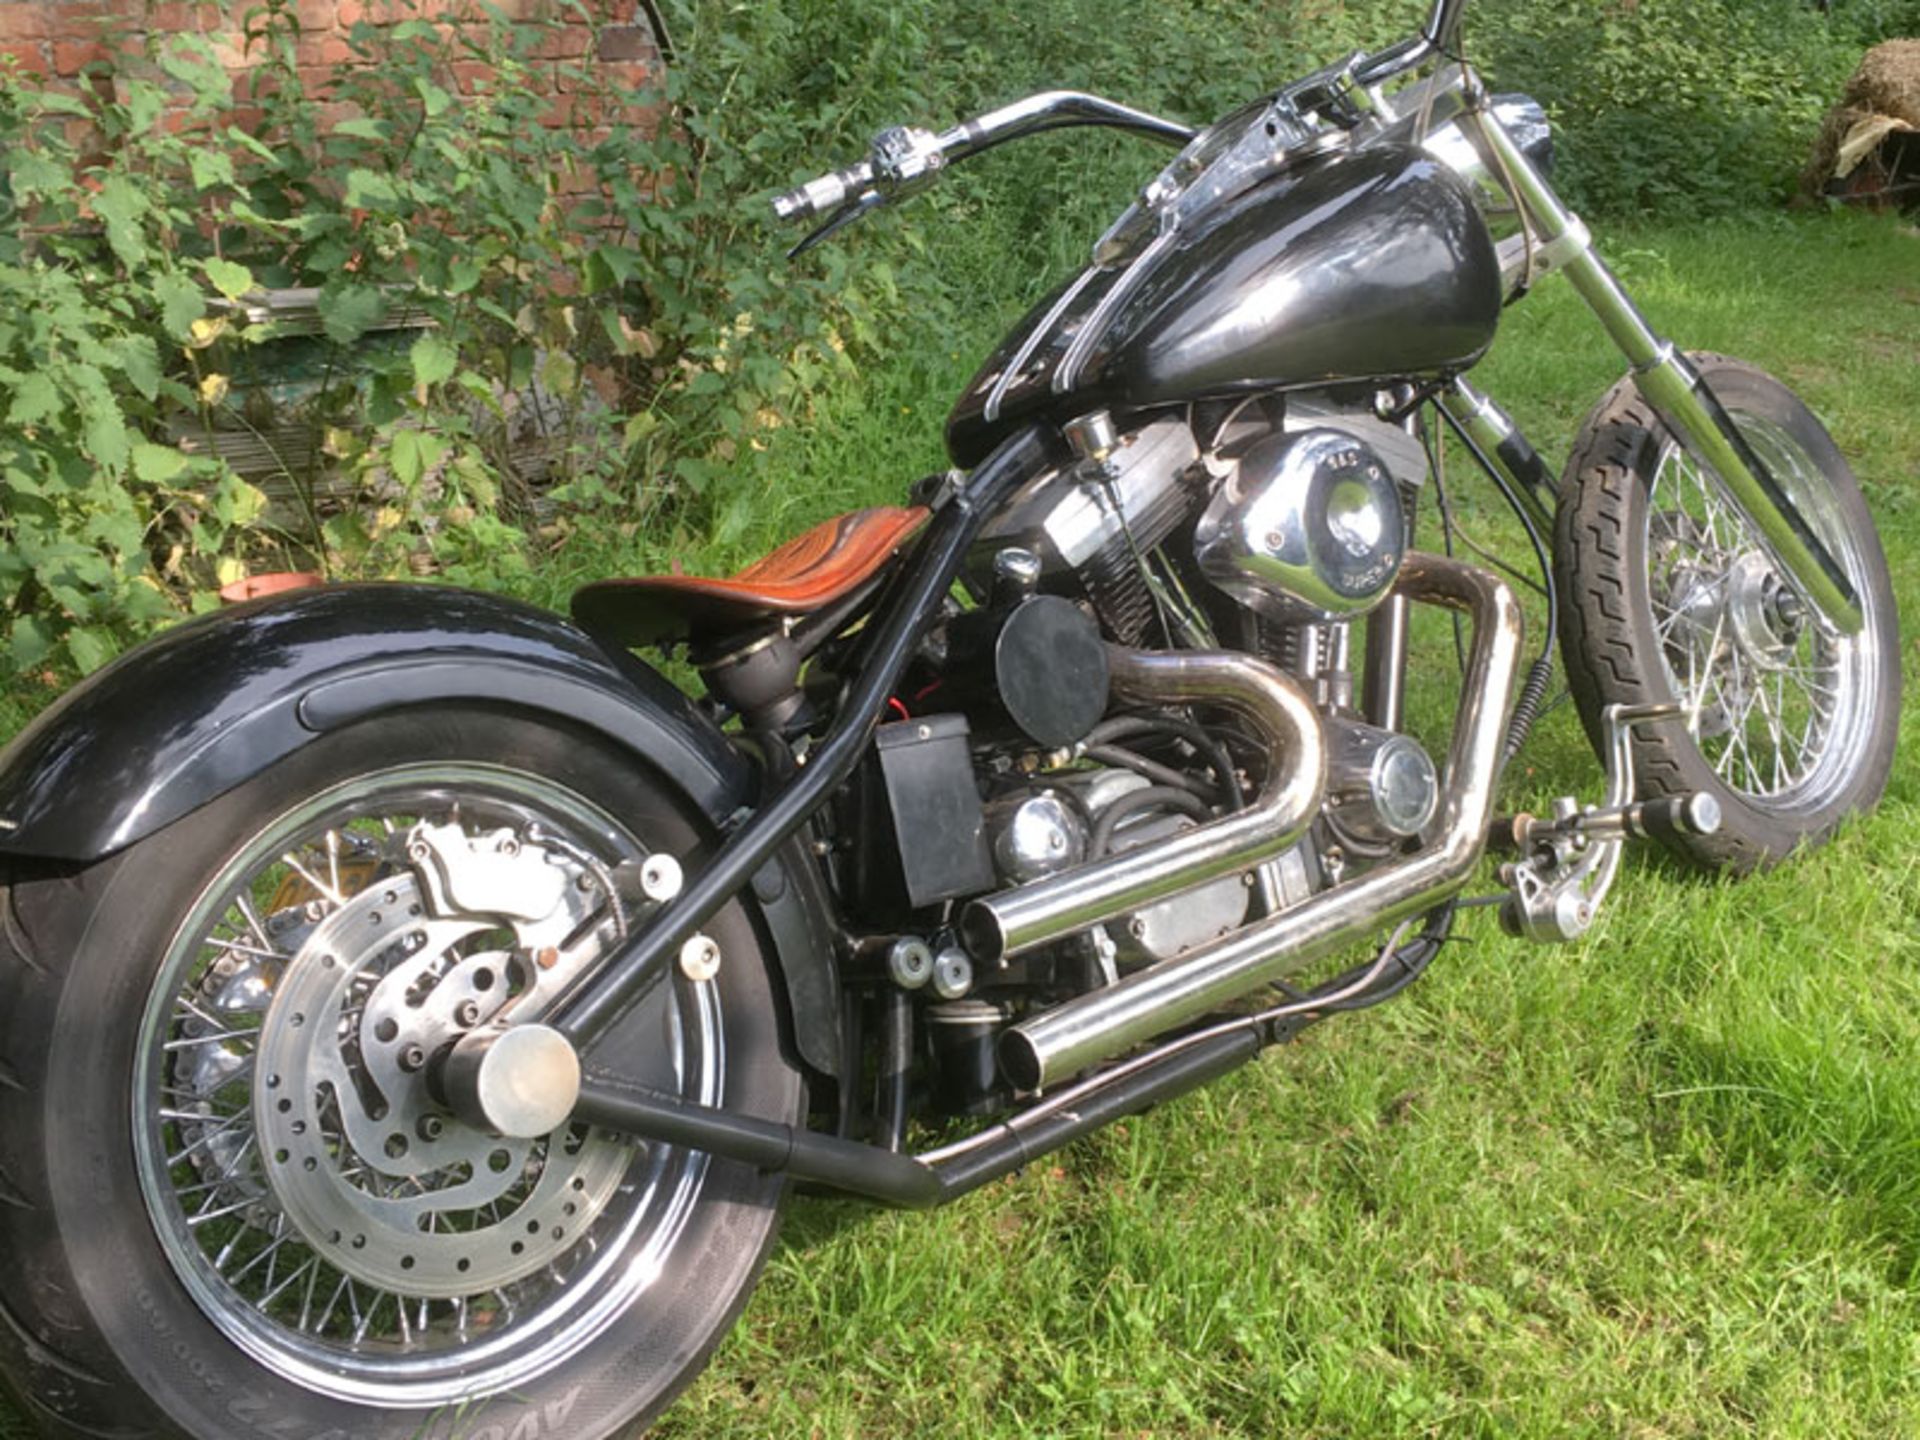 2001 Harley Davidson Custom - Image 2 of 2